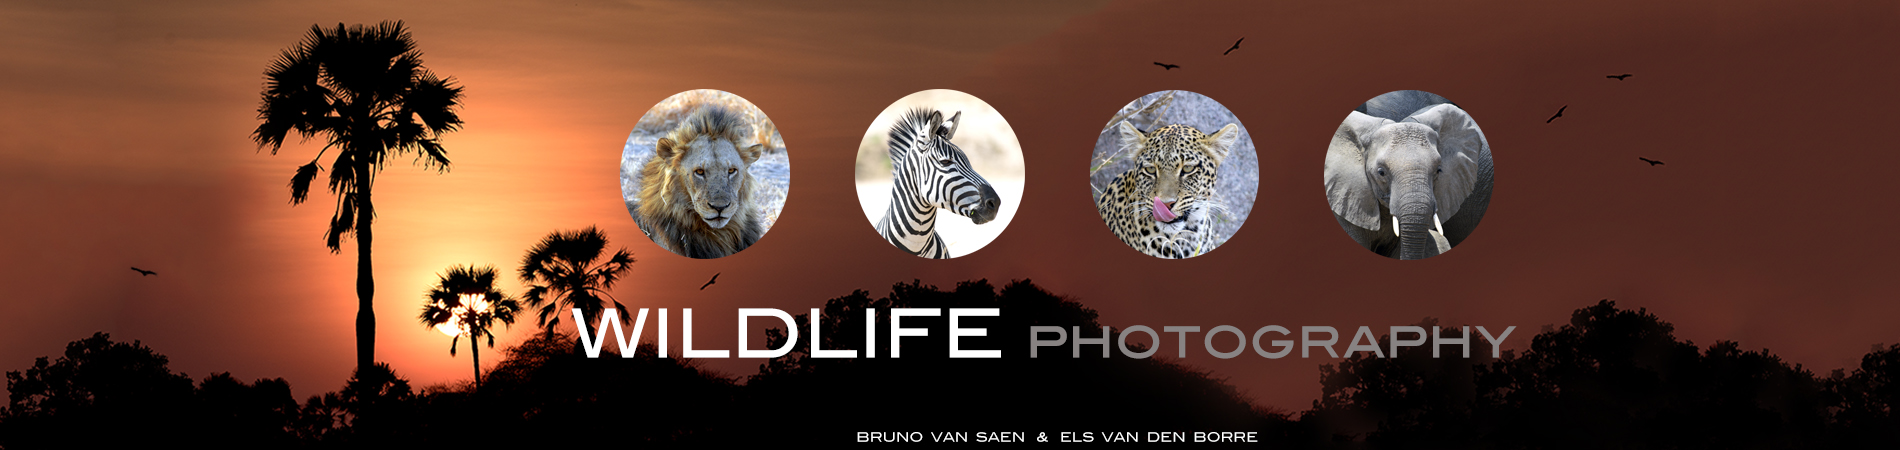 B&E wildlifephotography